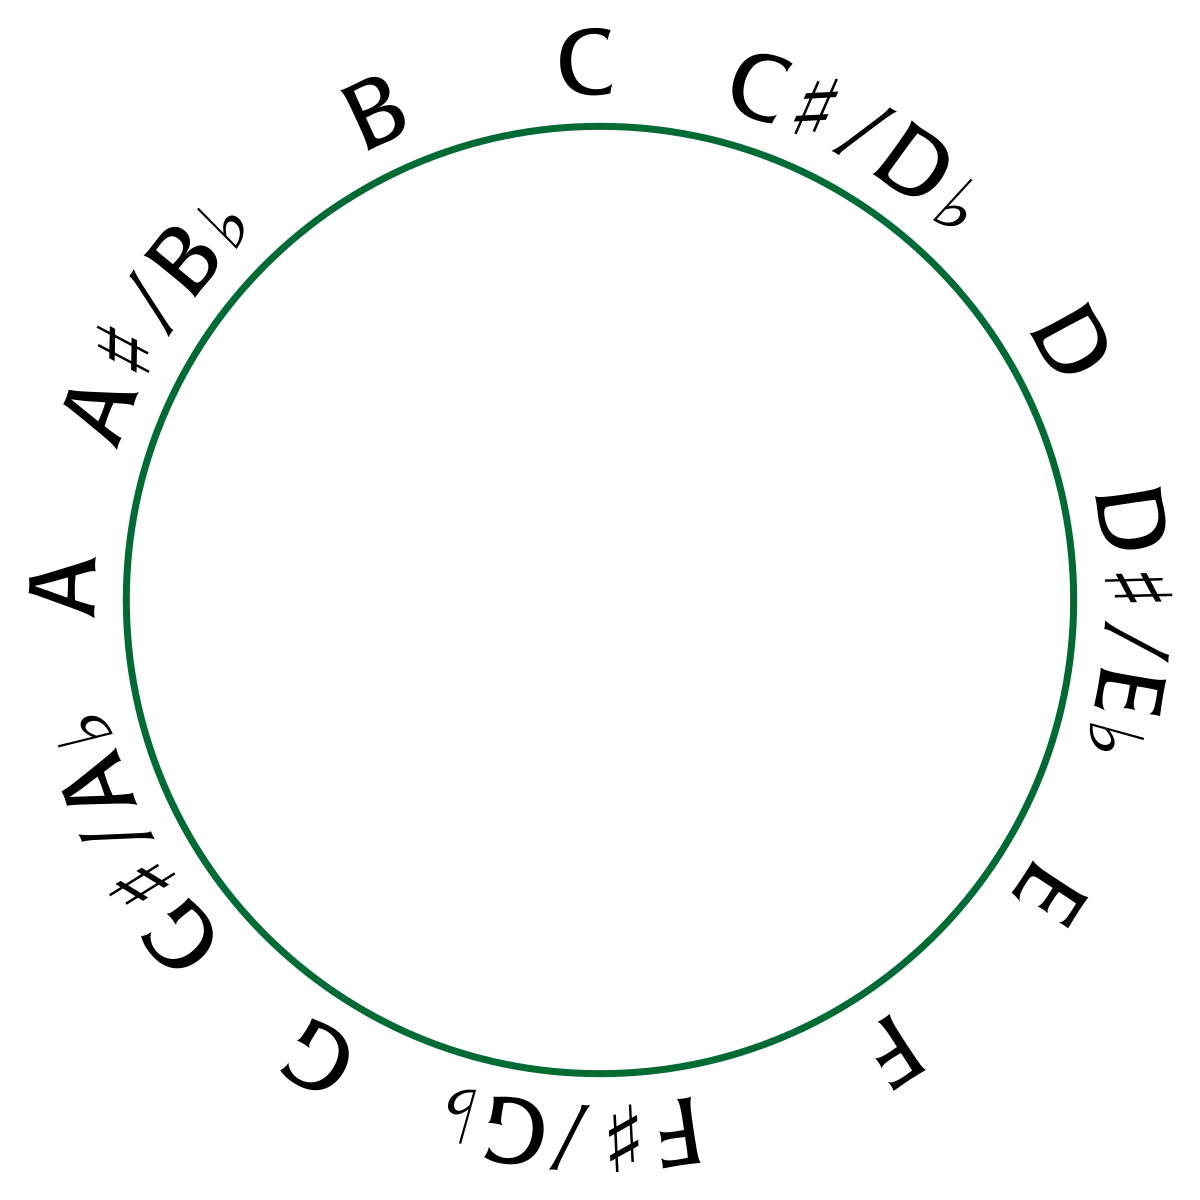 Chromatic circle - Unison